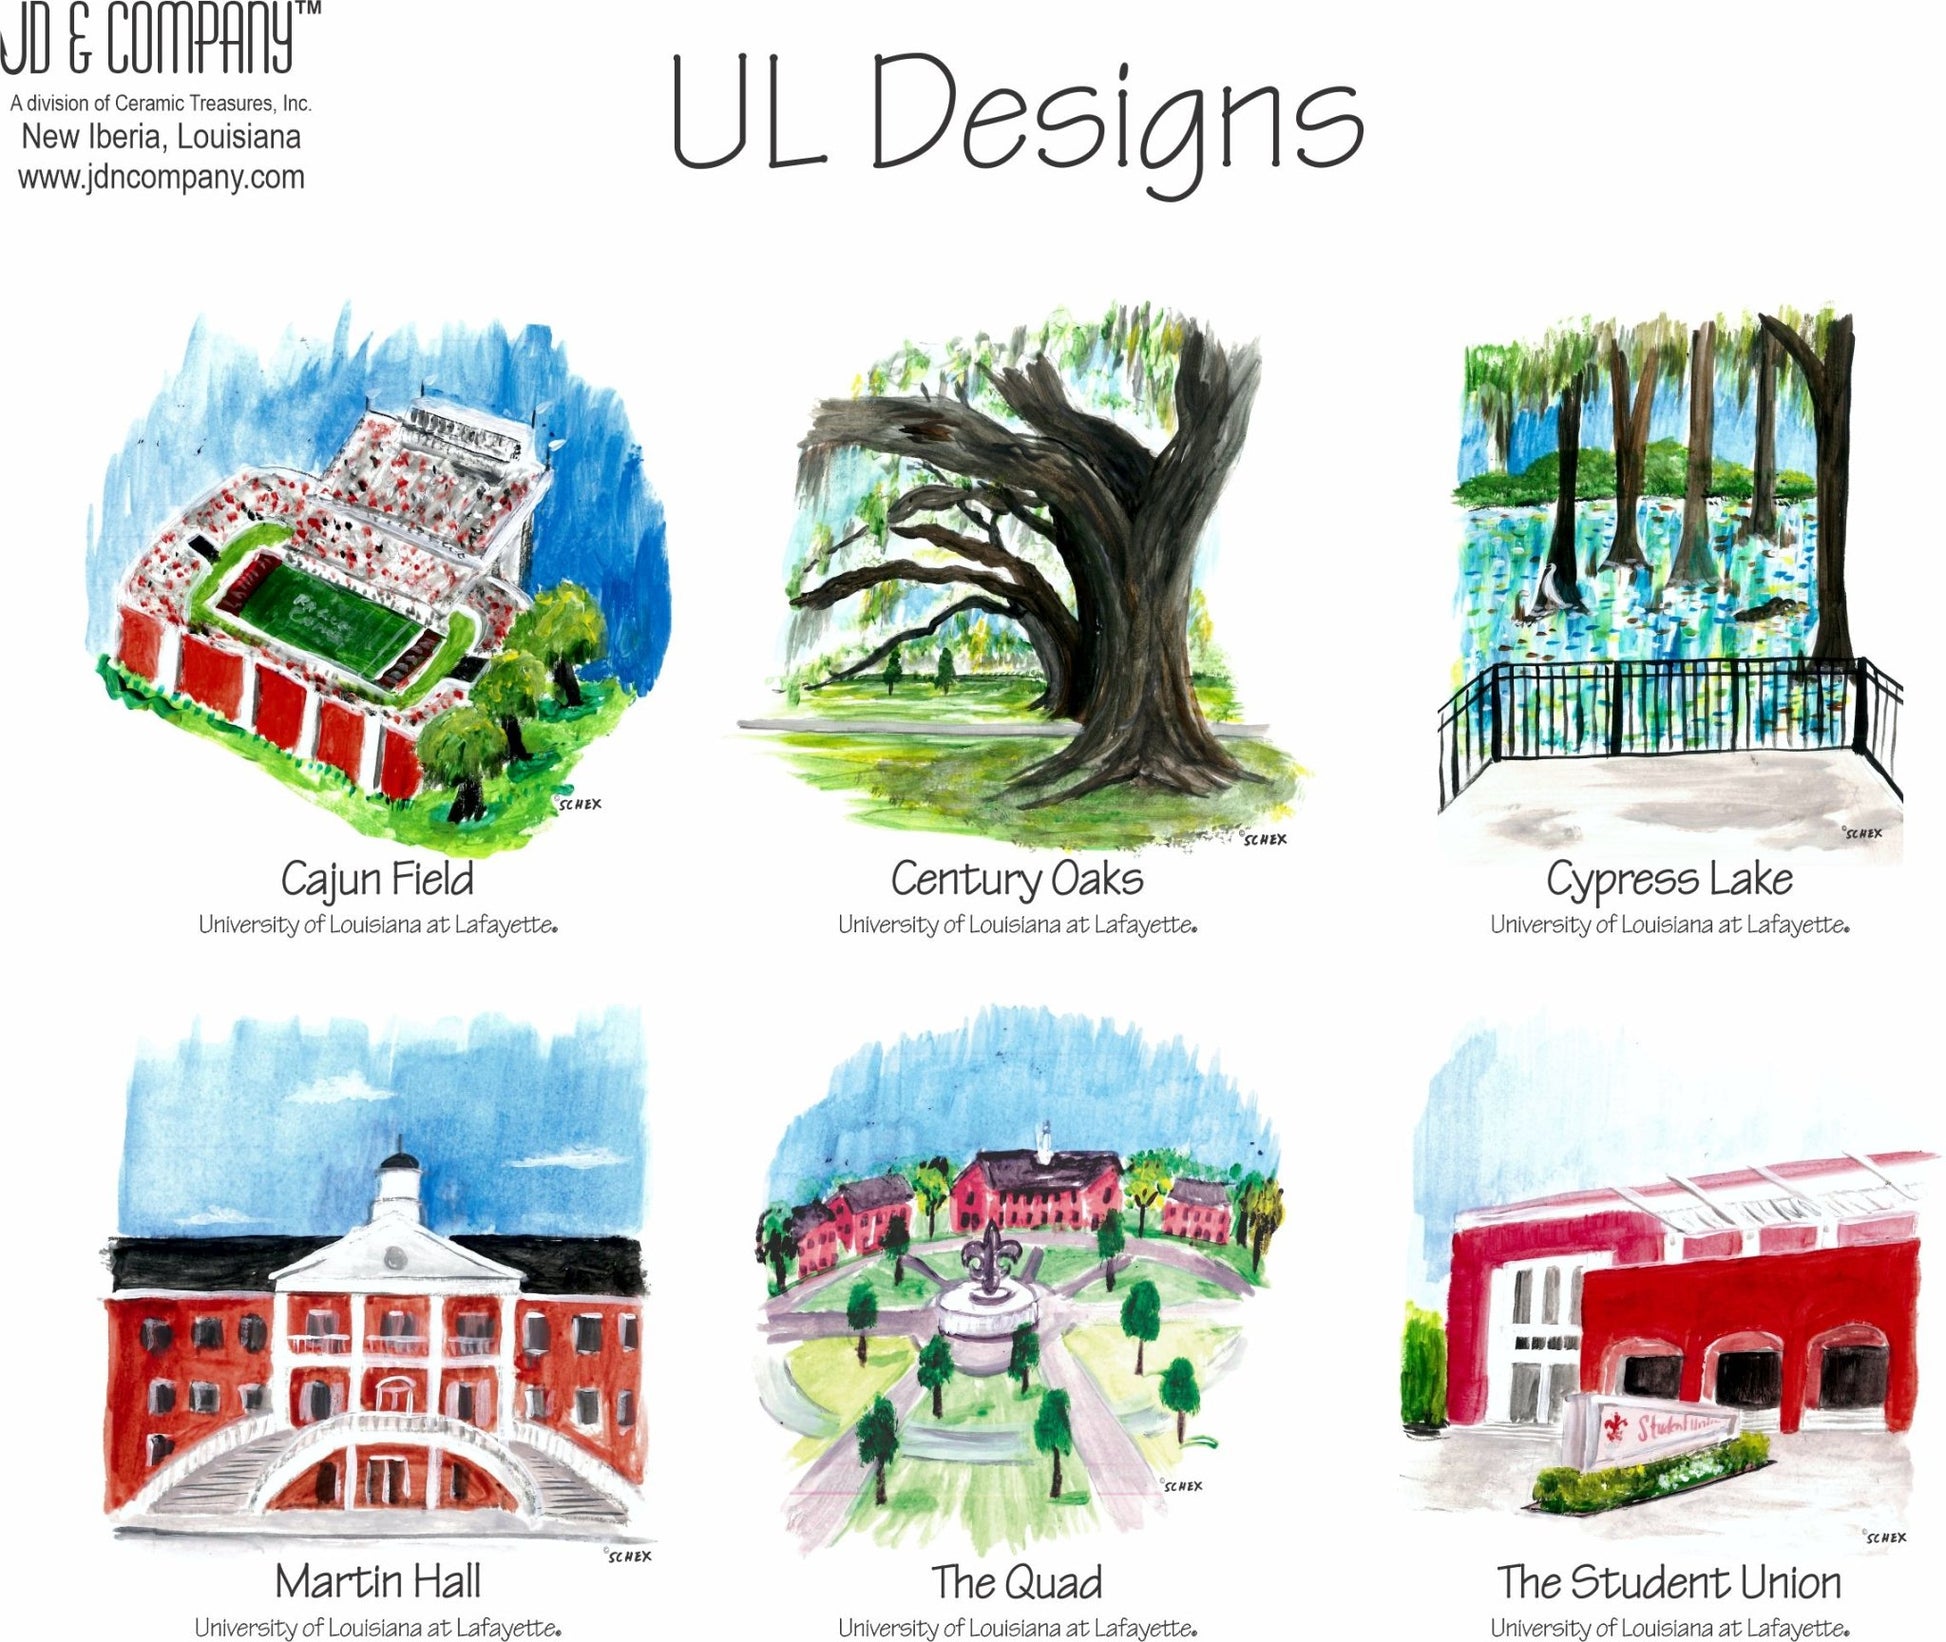 UL Designs